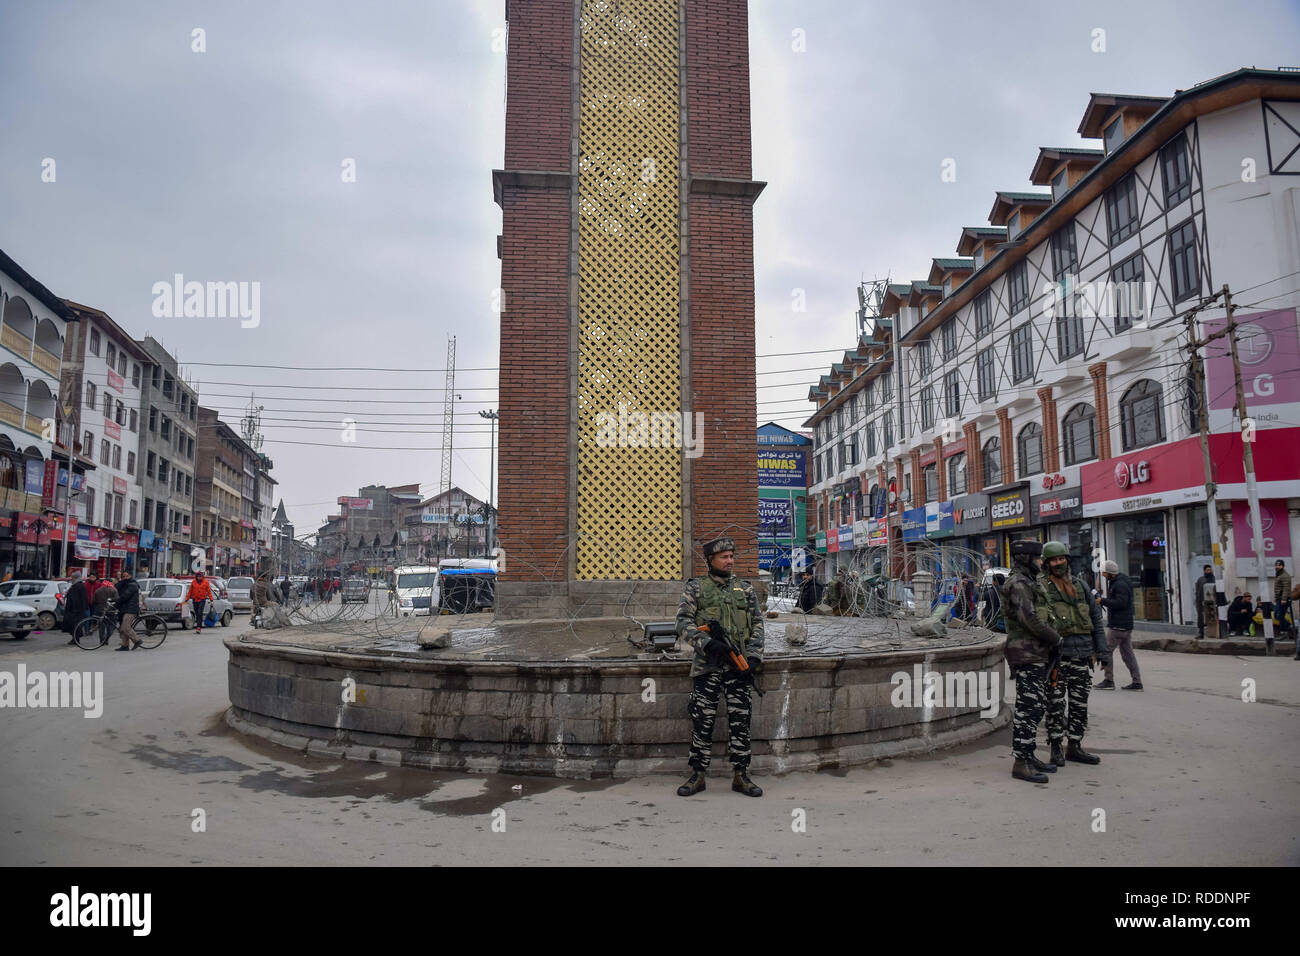 January 18, 2019 - Srinagar, Jammu & Kashmir, India - Indian paramilitary forces seen standing guard next to the Clock tower at city center Lal chowk Srinagar. Credit: Idrees Abbas/SOPA Images/ZUMA Wire/Alamy Live News Stock Photo